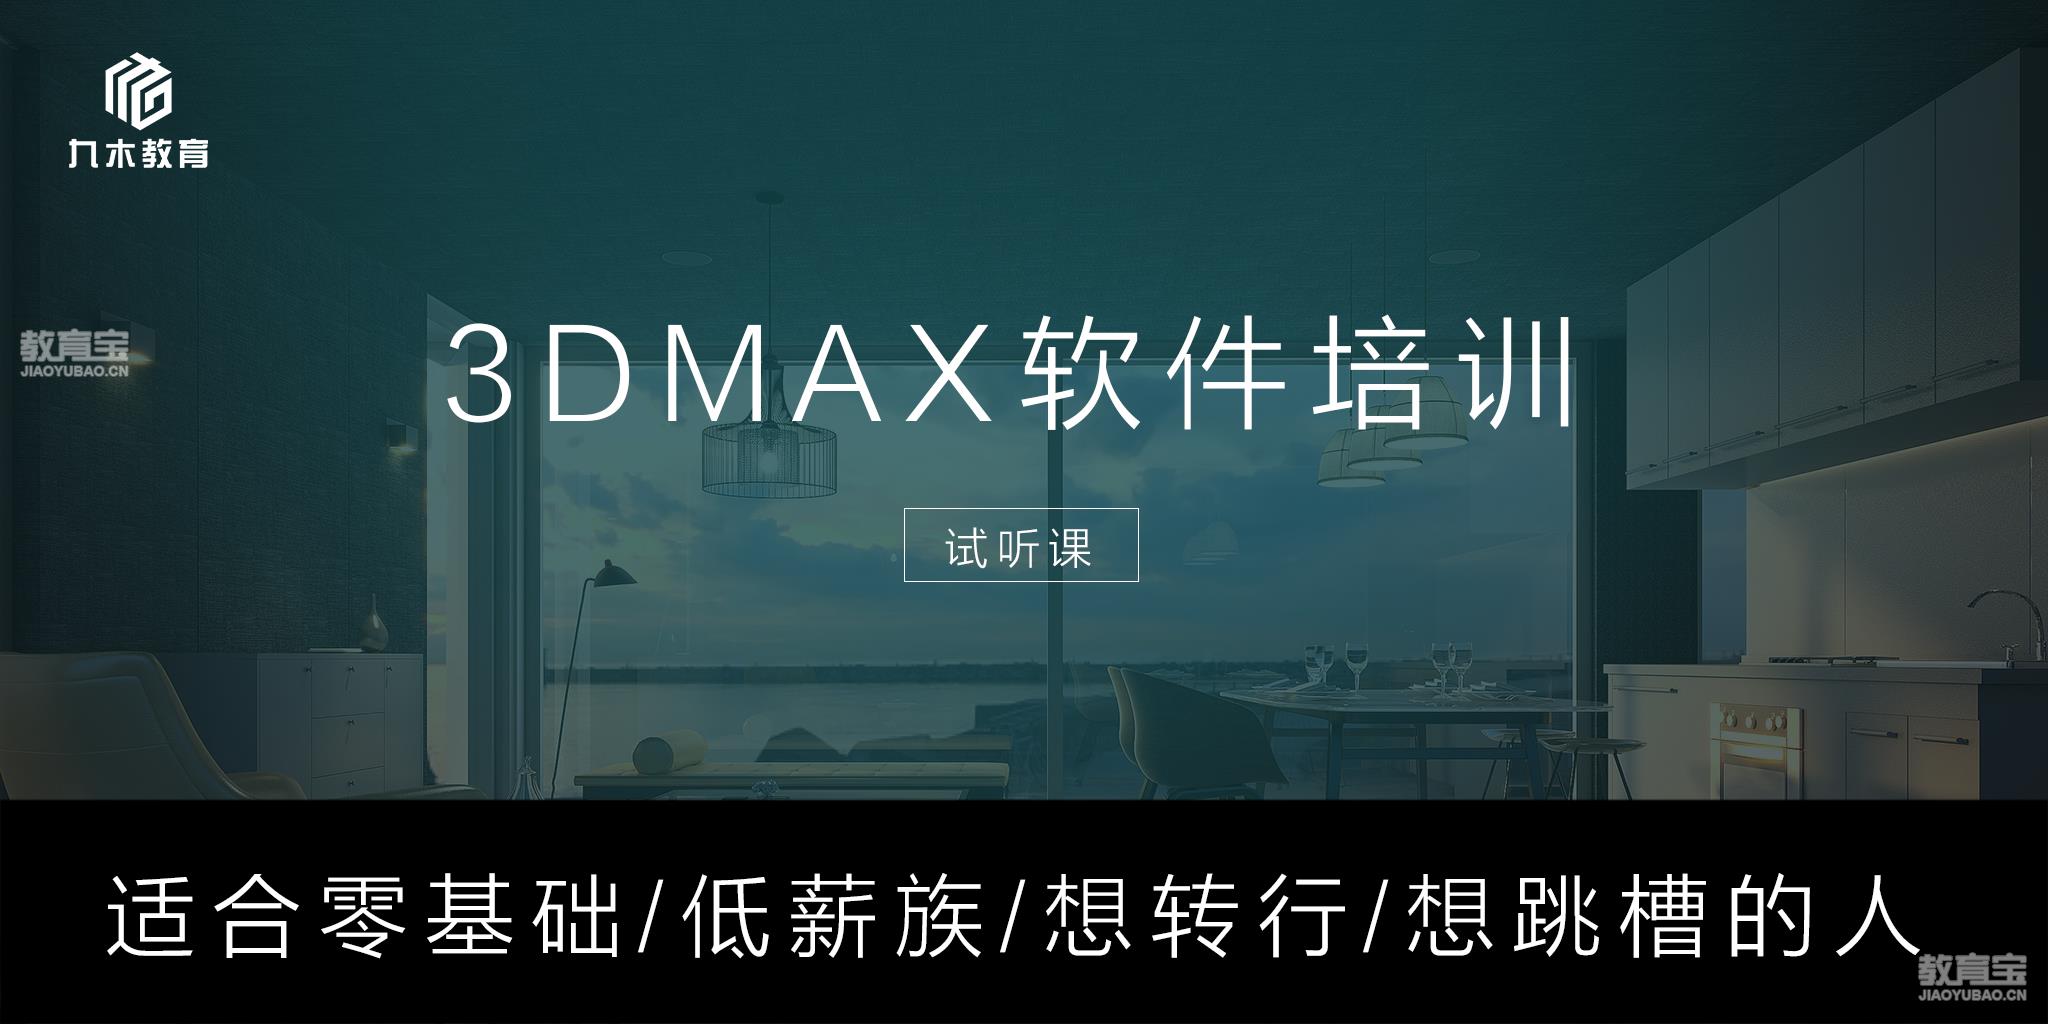 3DMAX效果图培训班